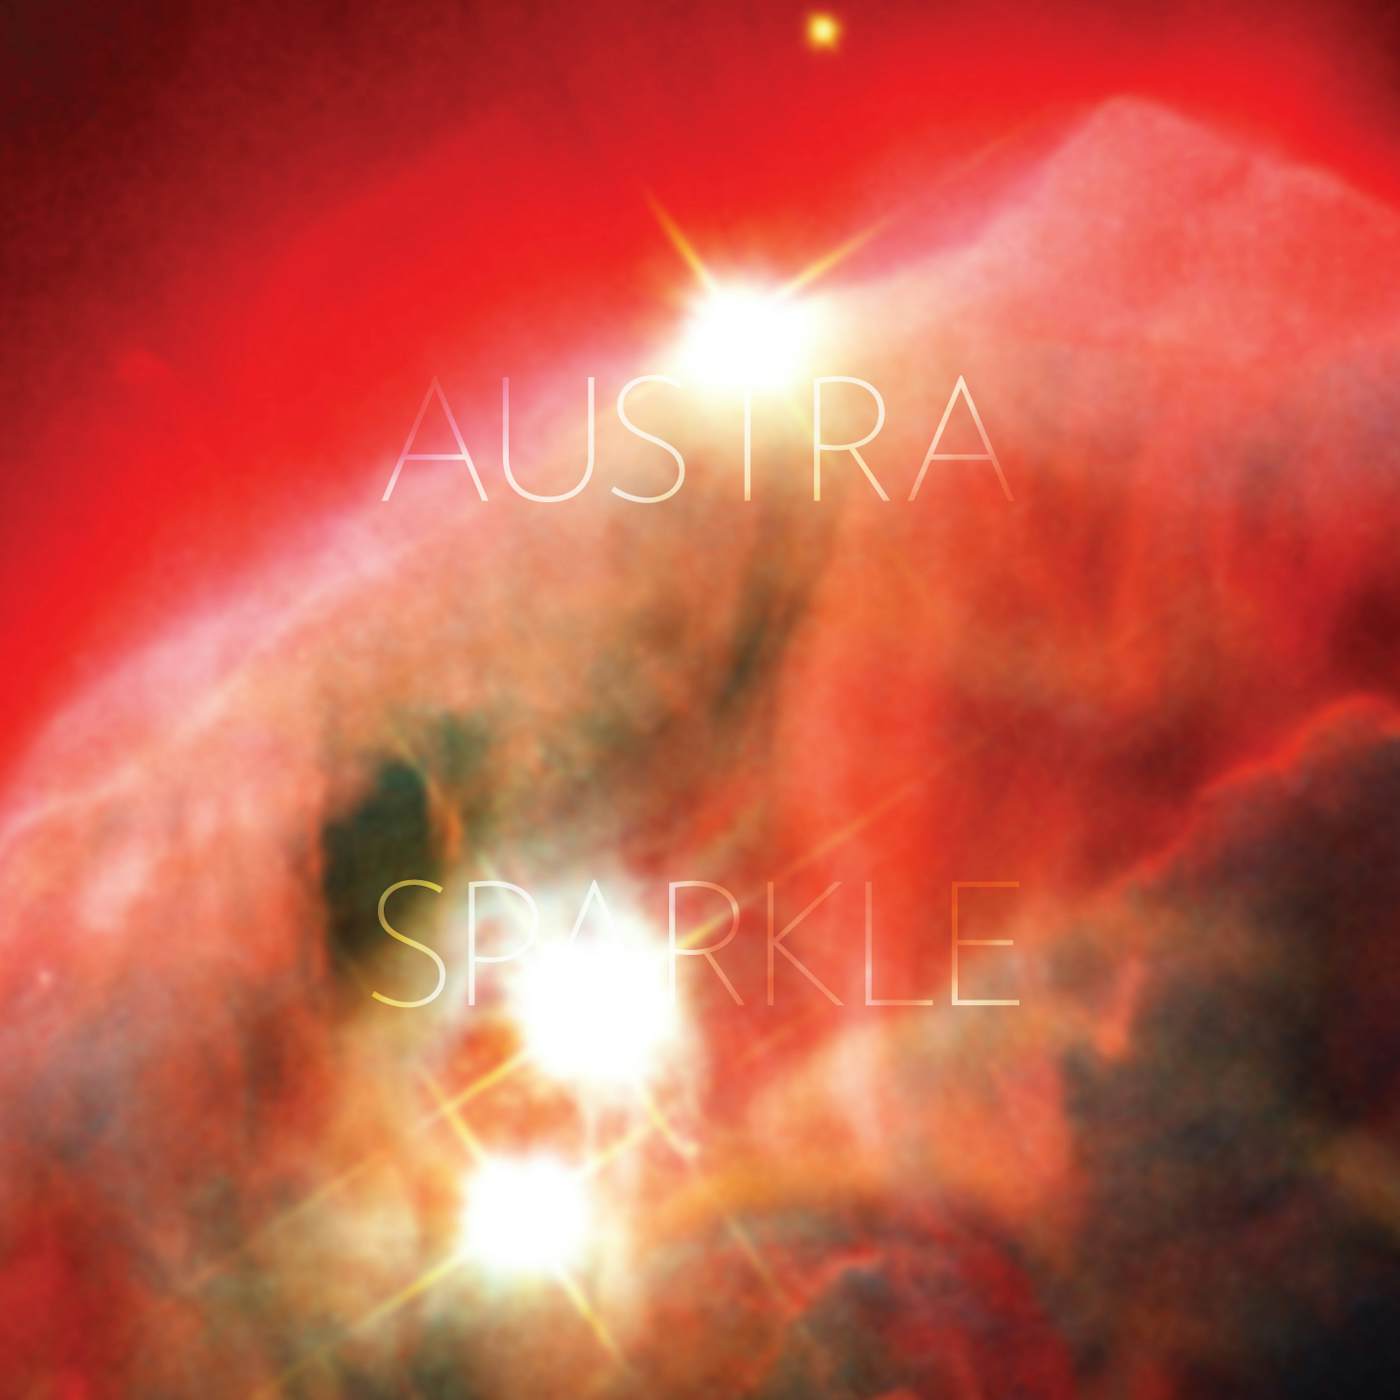 Austra SPARKLE 12INCH Vinyl Record